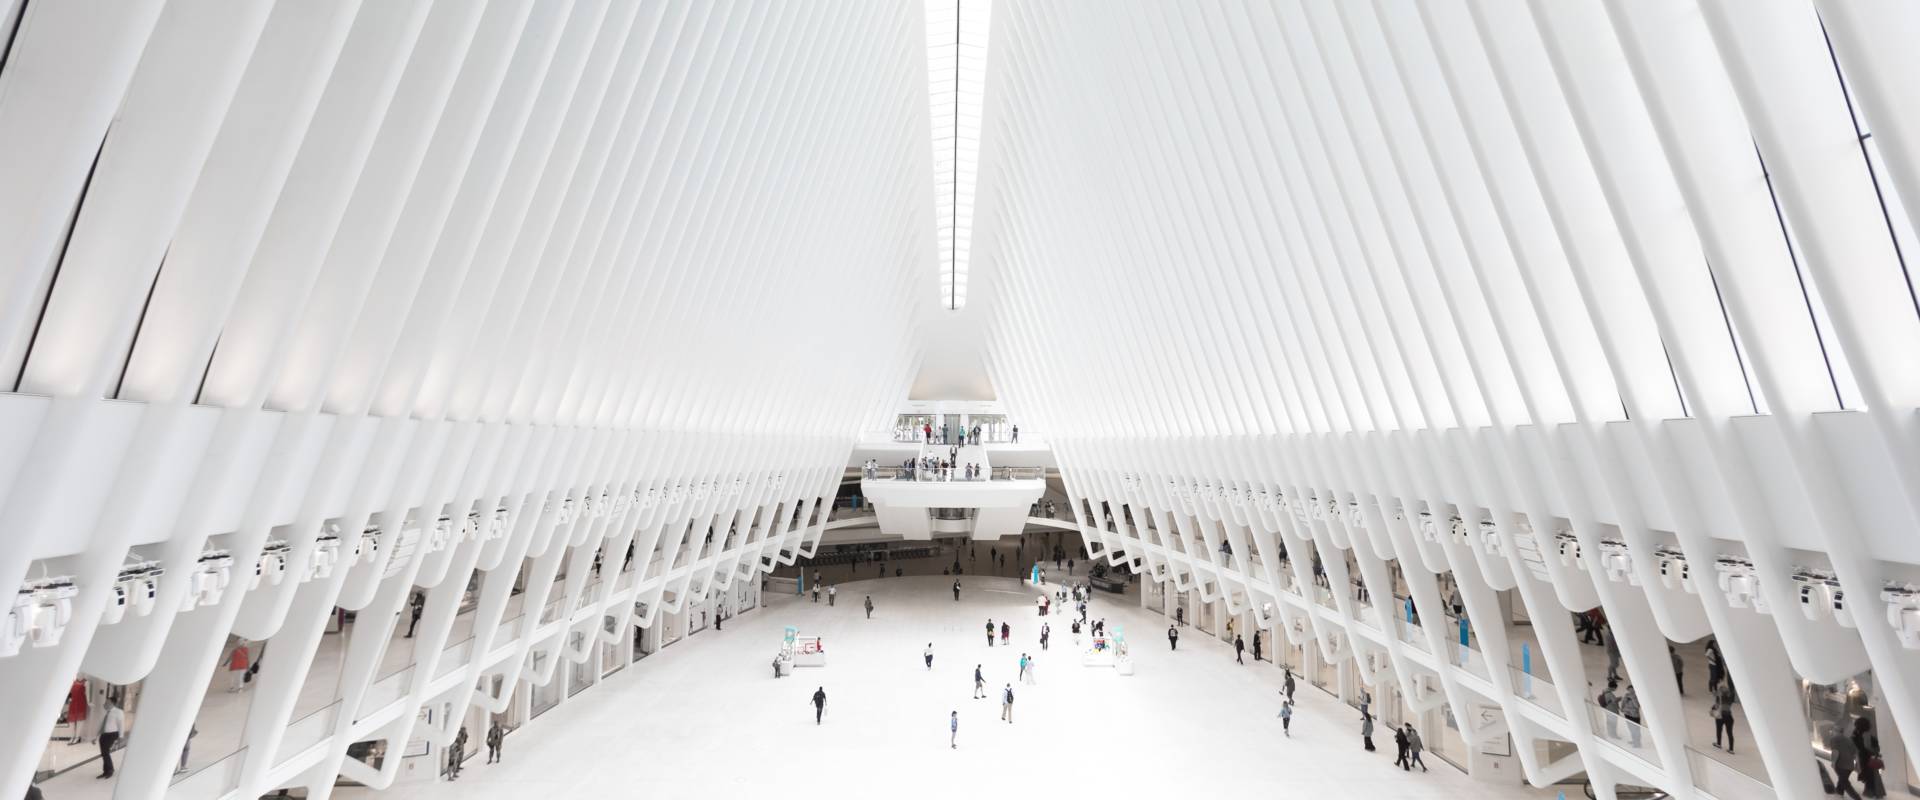 Blick in die Oculus U-Bahn-Station in New York - Quelle: Dorian Mongel via unsplash.com